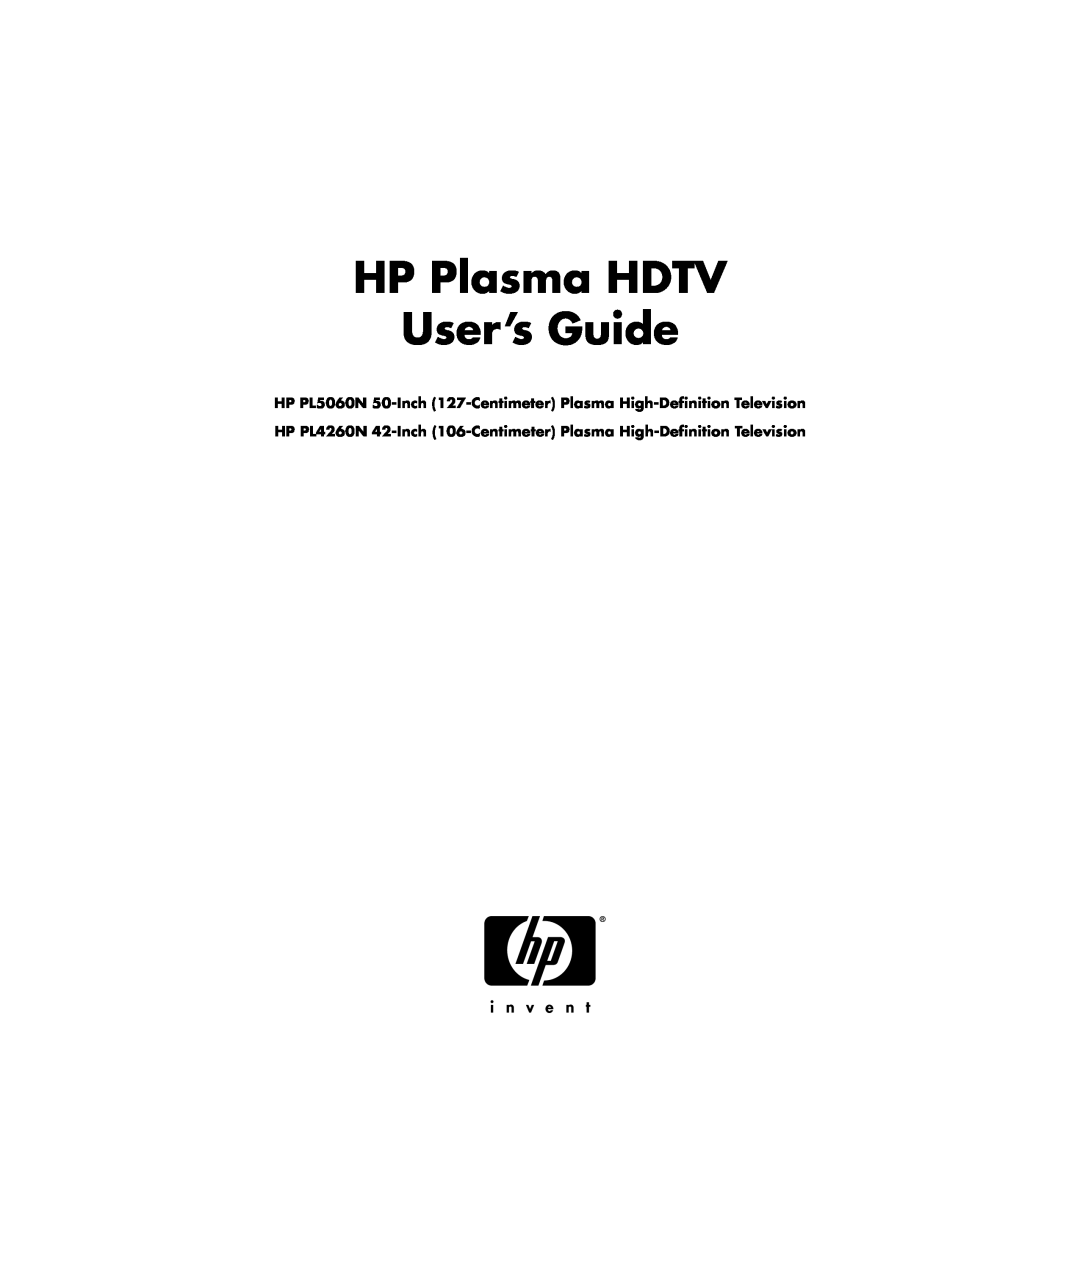 HP PL4260N 42 inch Plasma, PL5060N 50 inch Plasma manual HP Plasma HDTV User’s Guide 